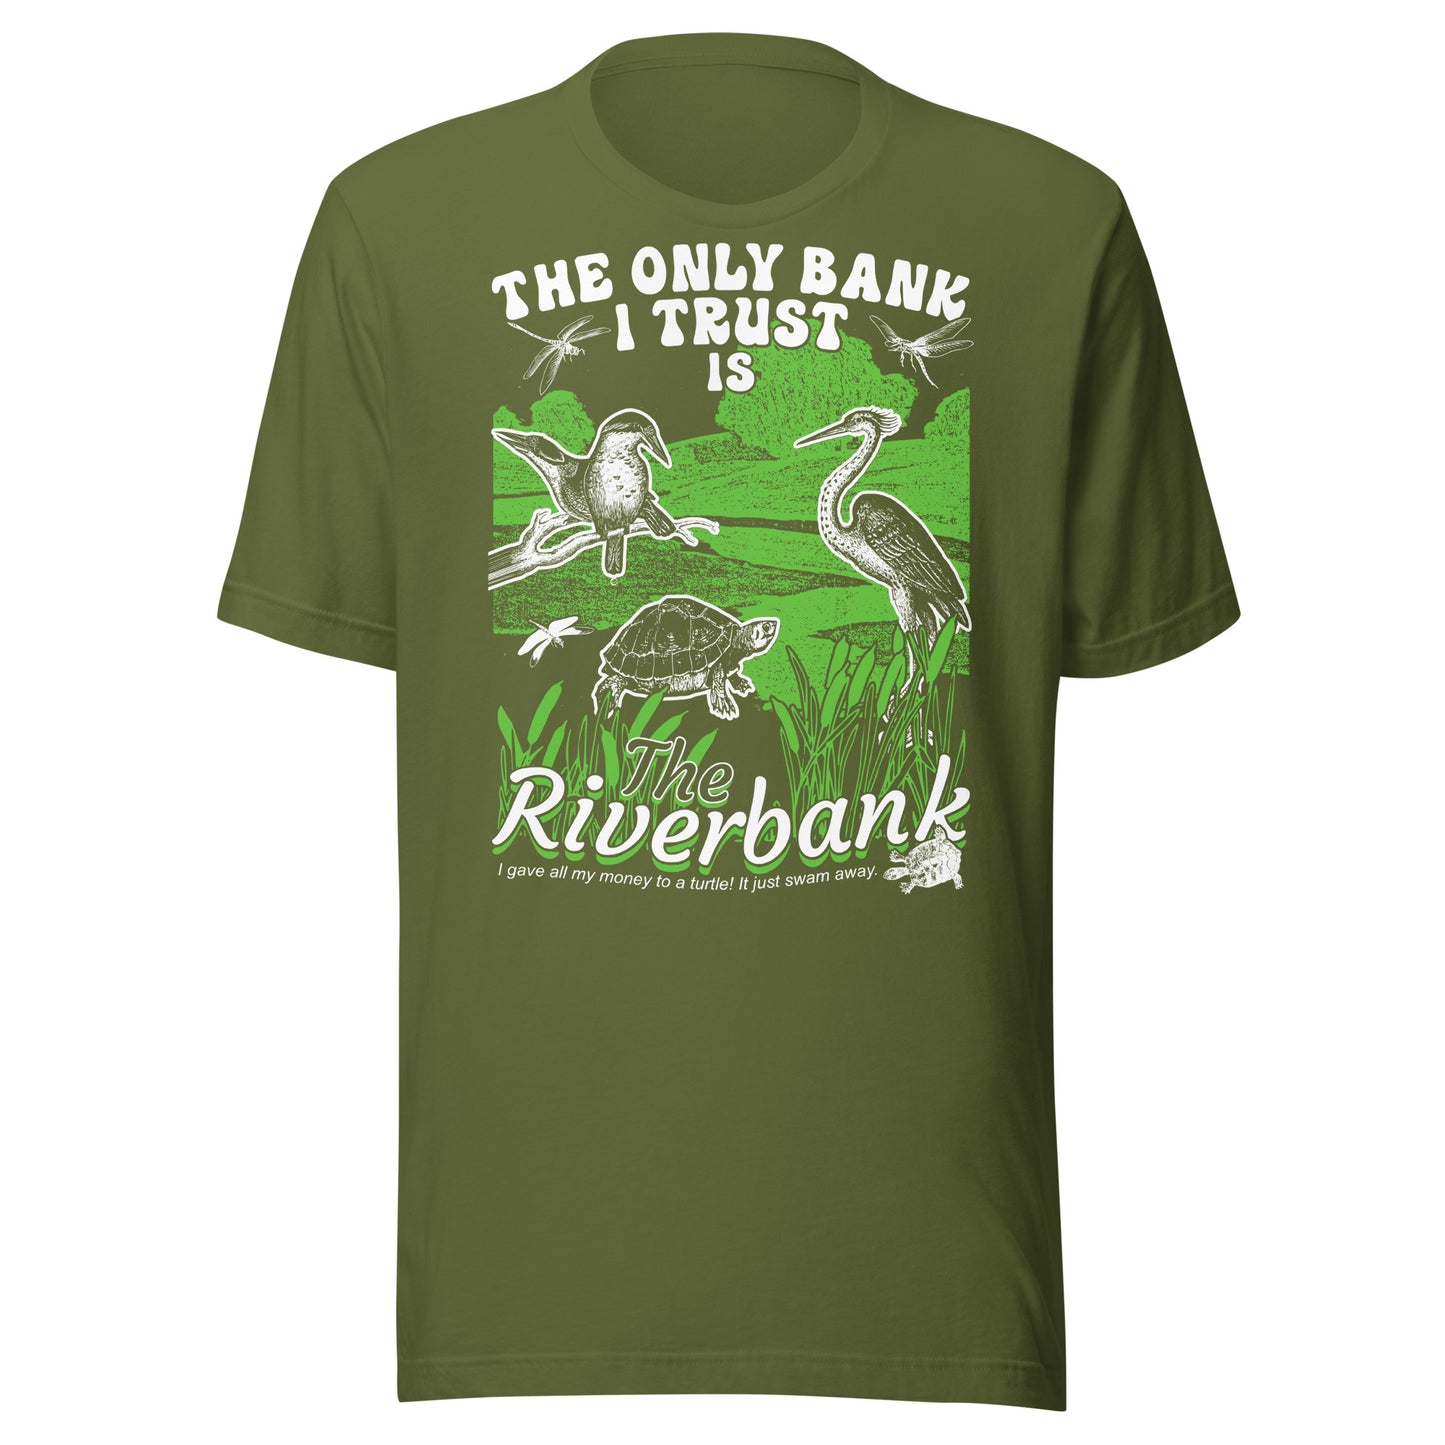 "The Riverbank" unisex tee